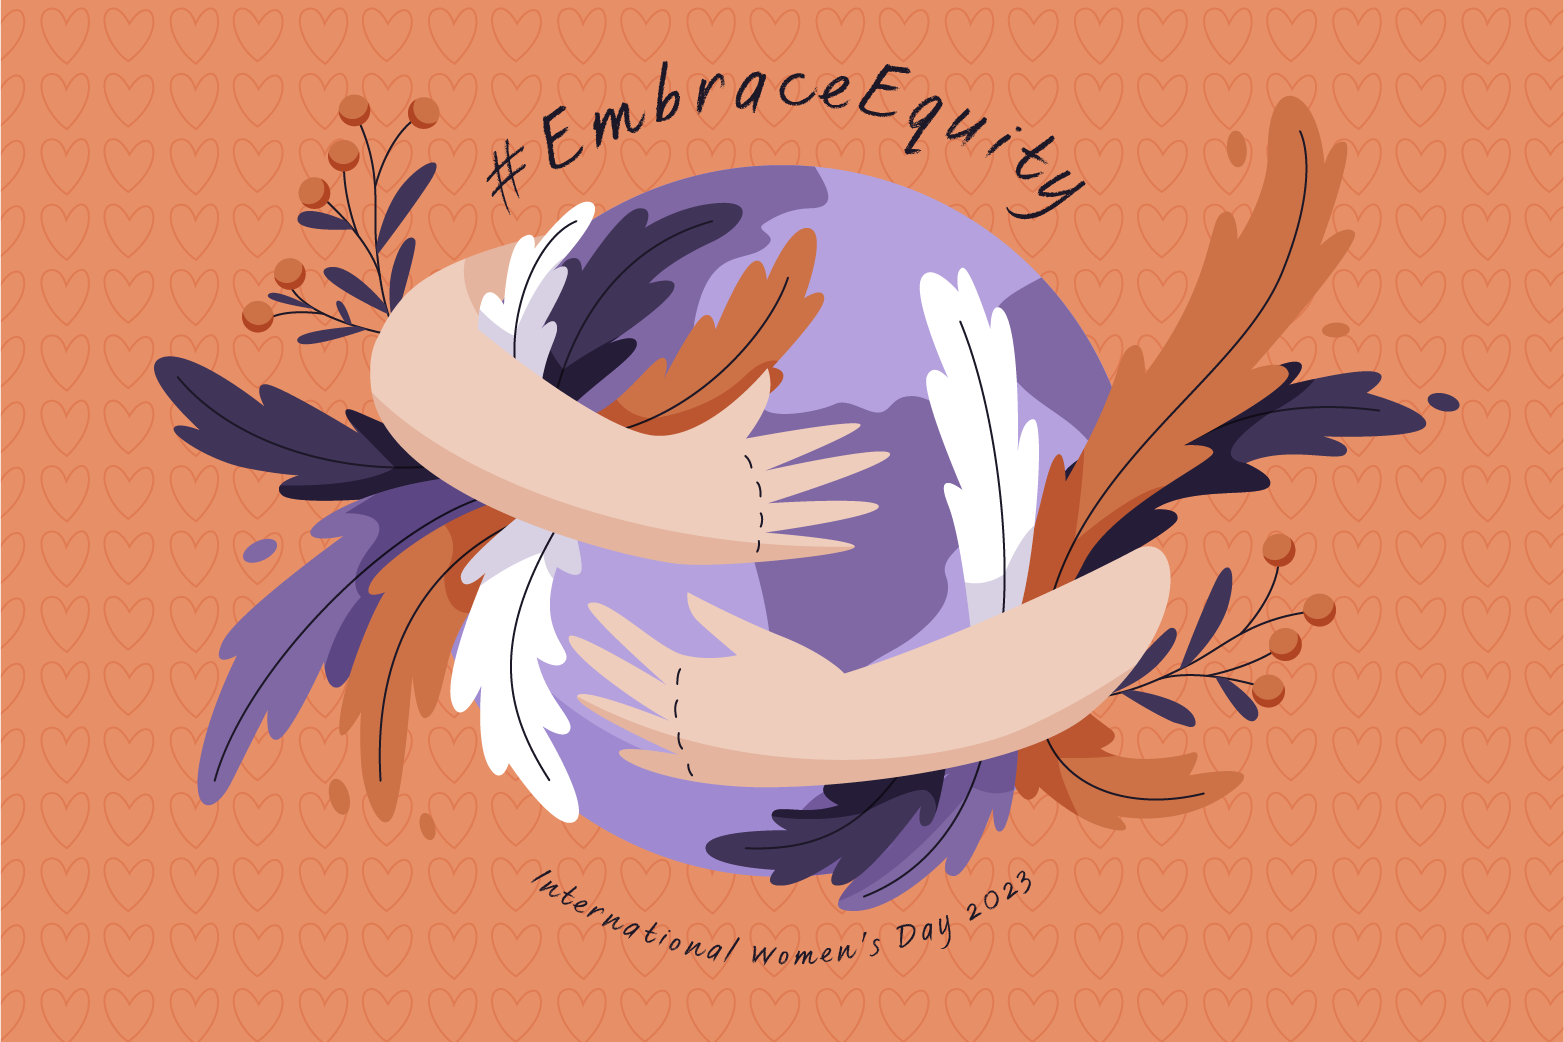 International Women's Day: Embrace Equity – BritCham Shanghai